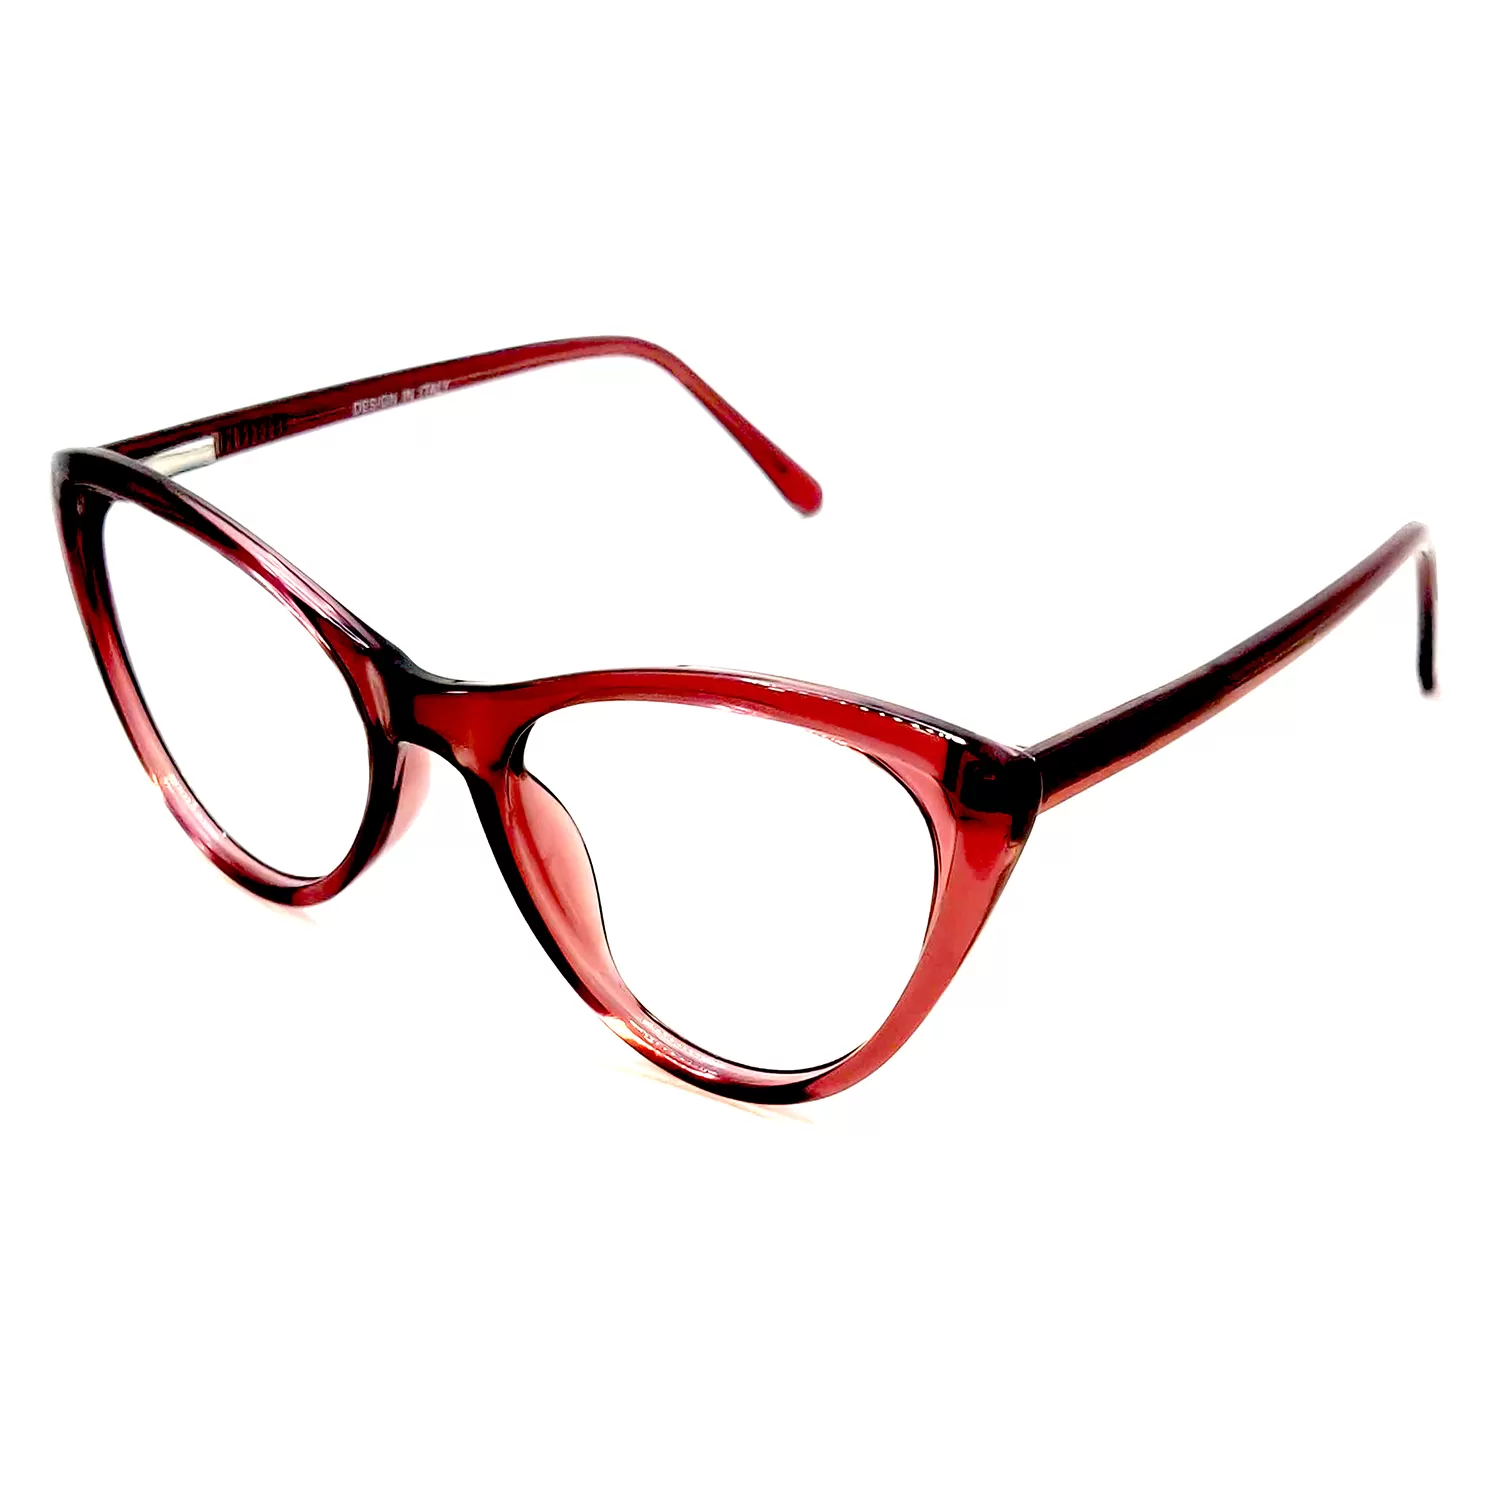 Buy cateye eyeglasses online at chashmah.com